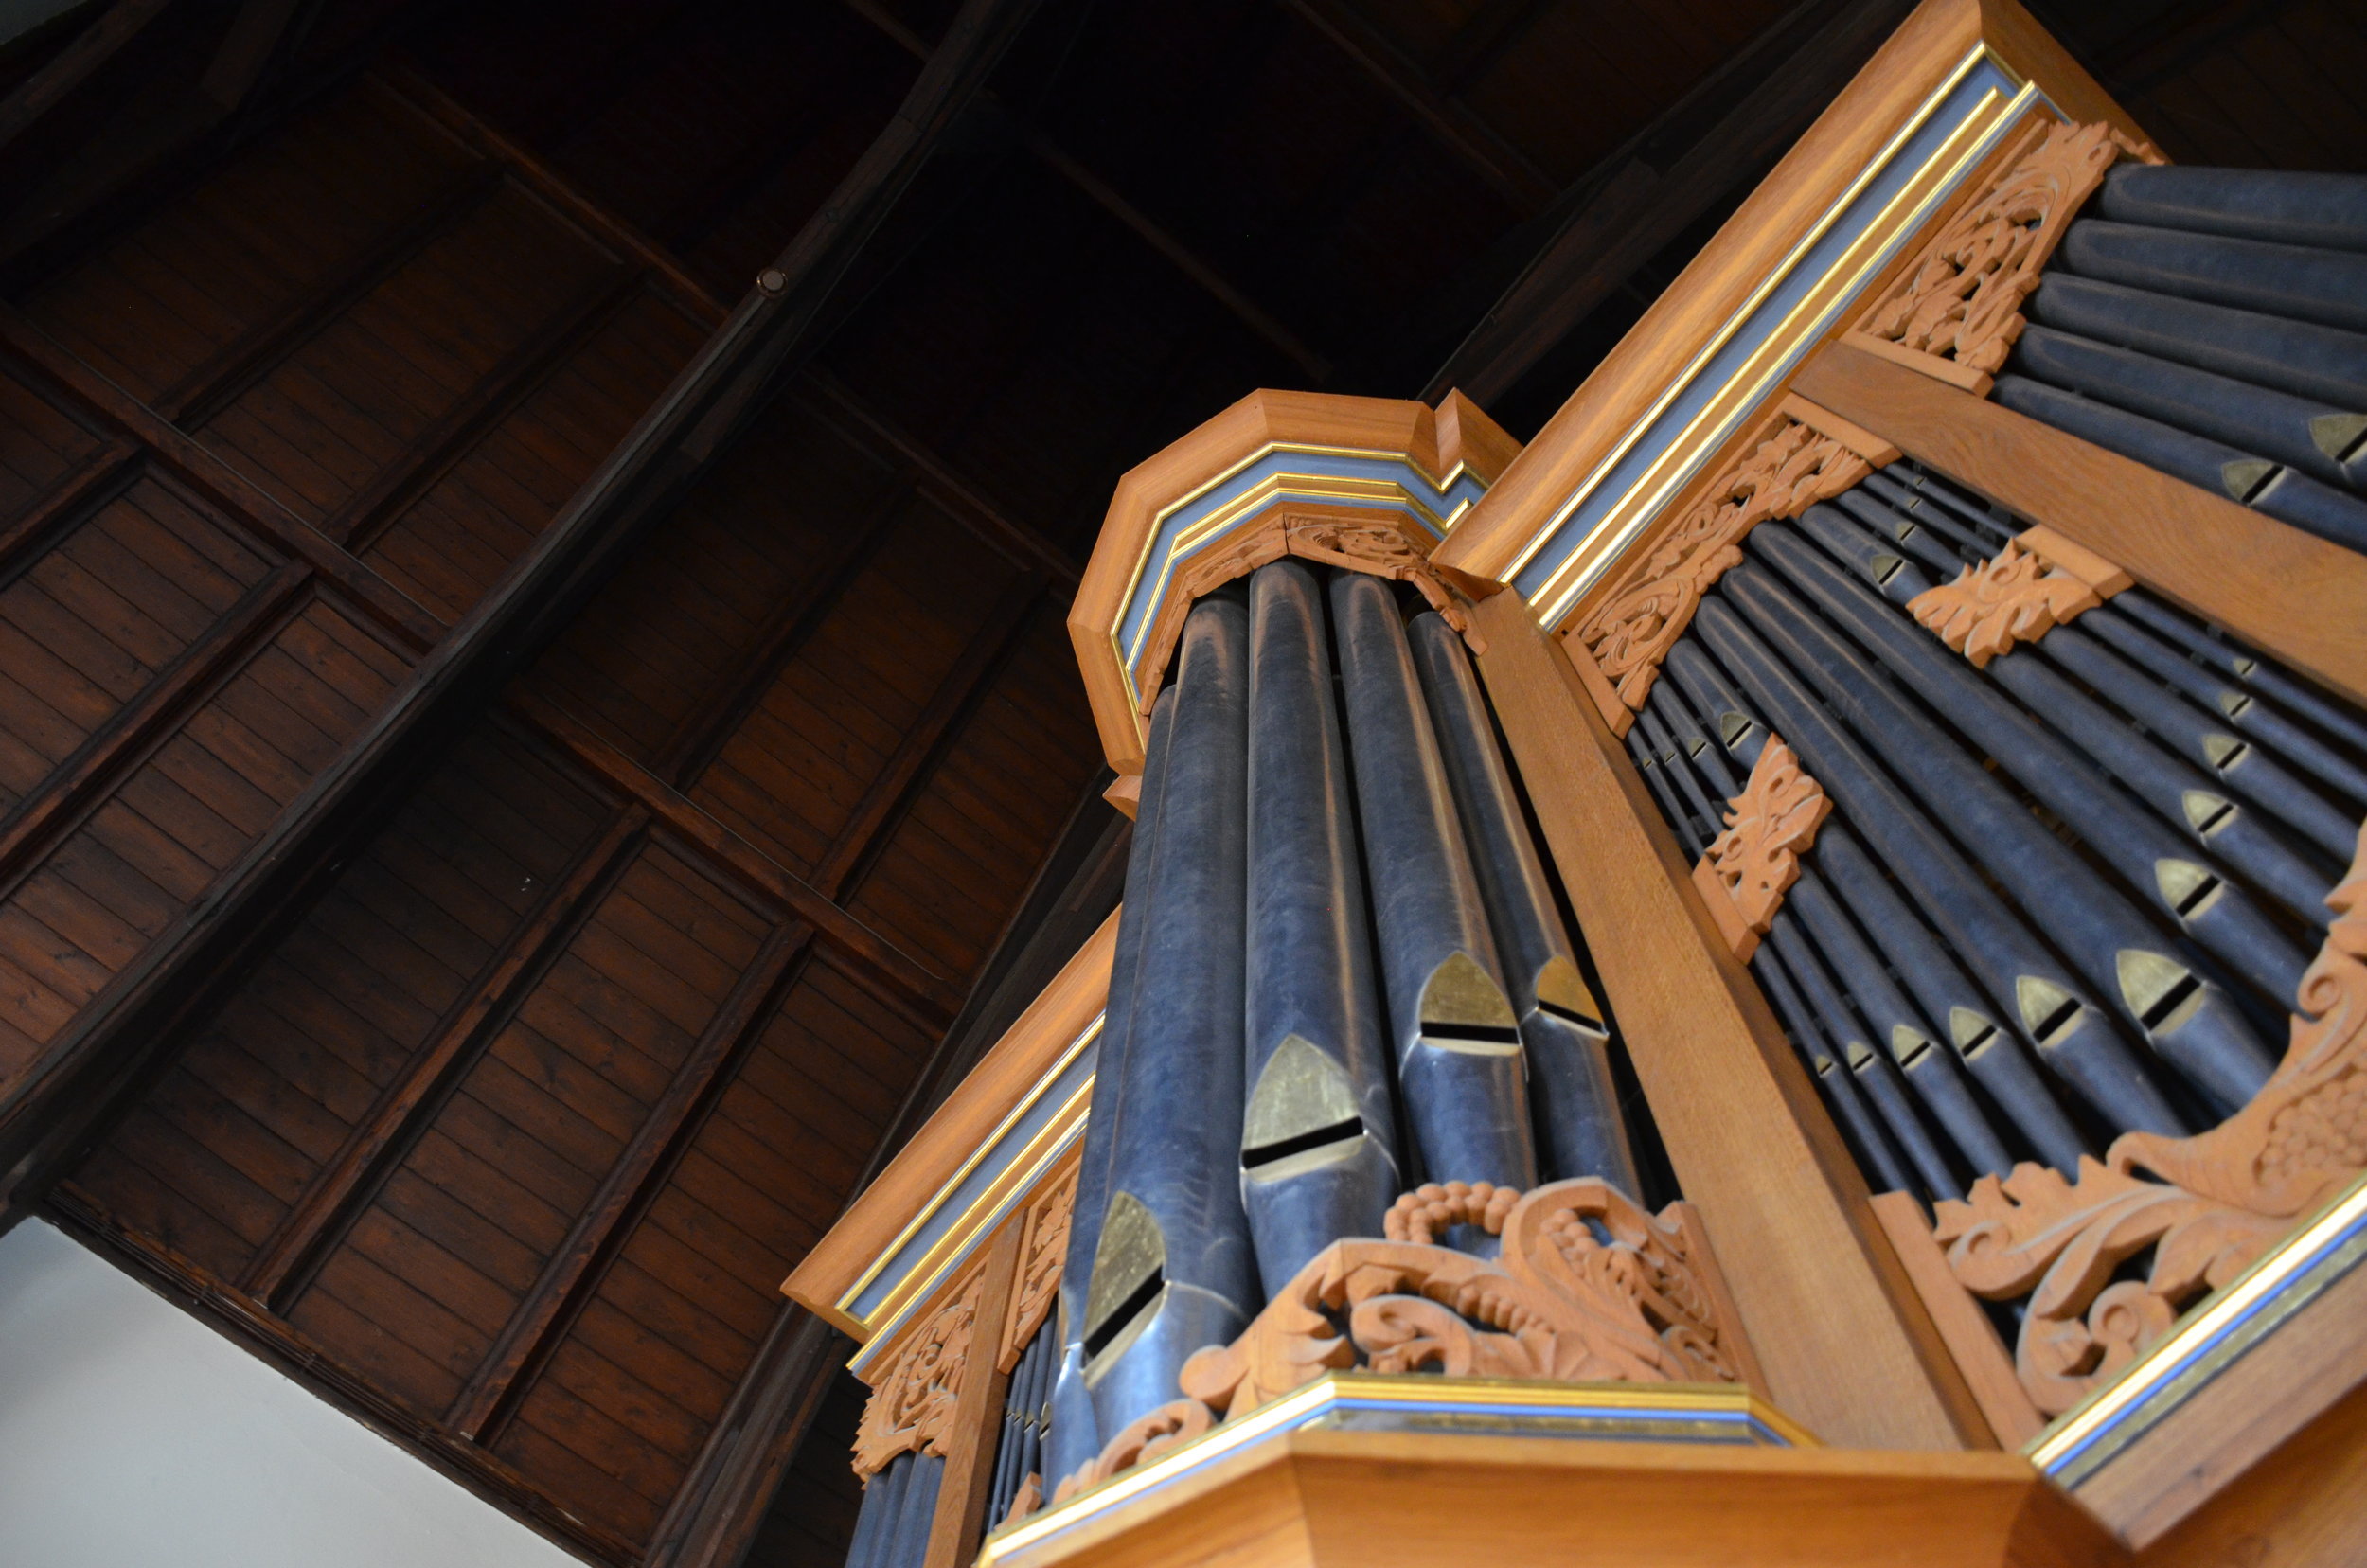  1992 Brombaugh organ, Haga Church, Göteborg, Sweden. 